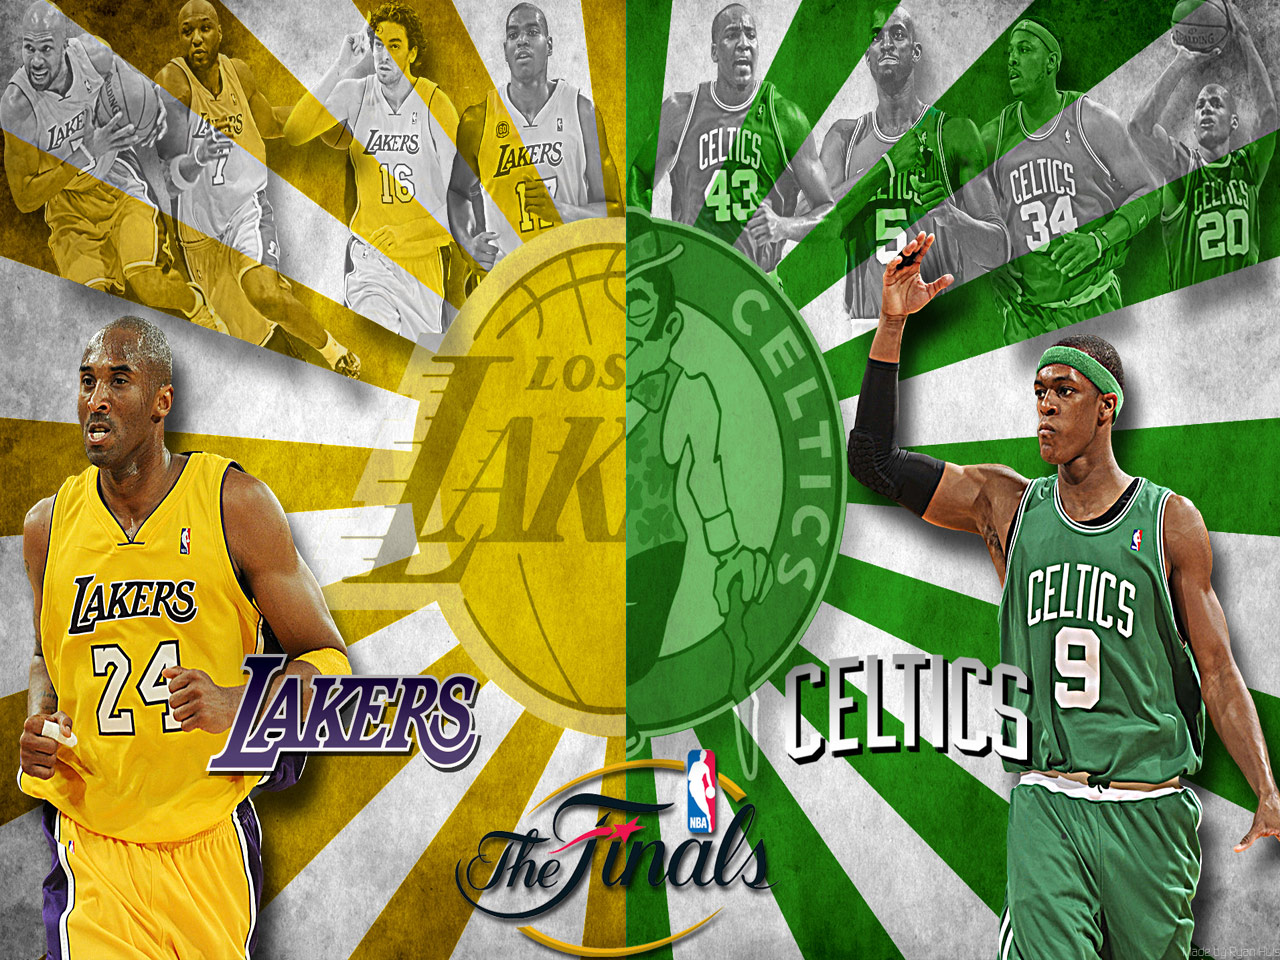 http://4.bp.blogspot.com/__evv34uhCME/TBqR1MxL1bI/AAAAAAAACiI/QmSHxUQ3n7I/s1600/NBA-Finals-2010-Celtics-VS-Lakers-Wallpaper.jpg